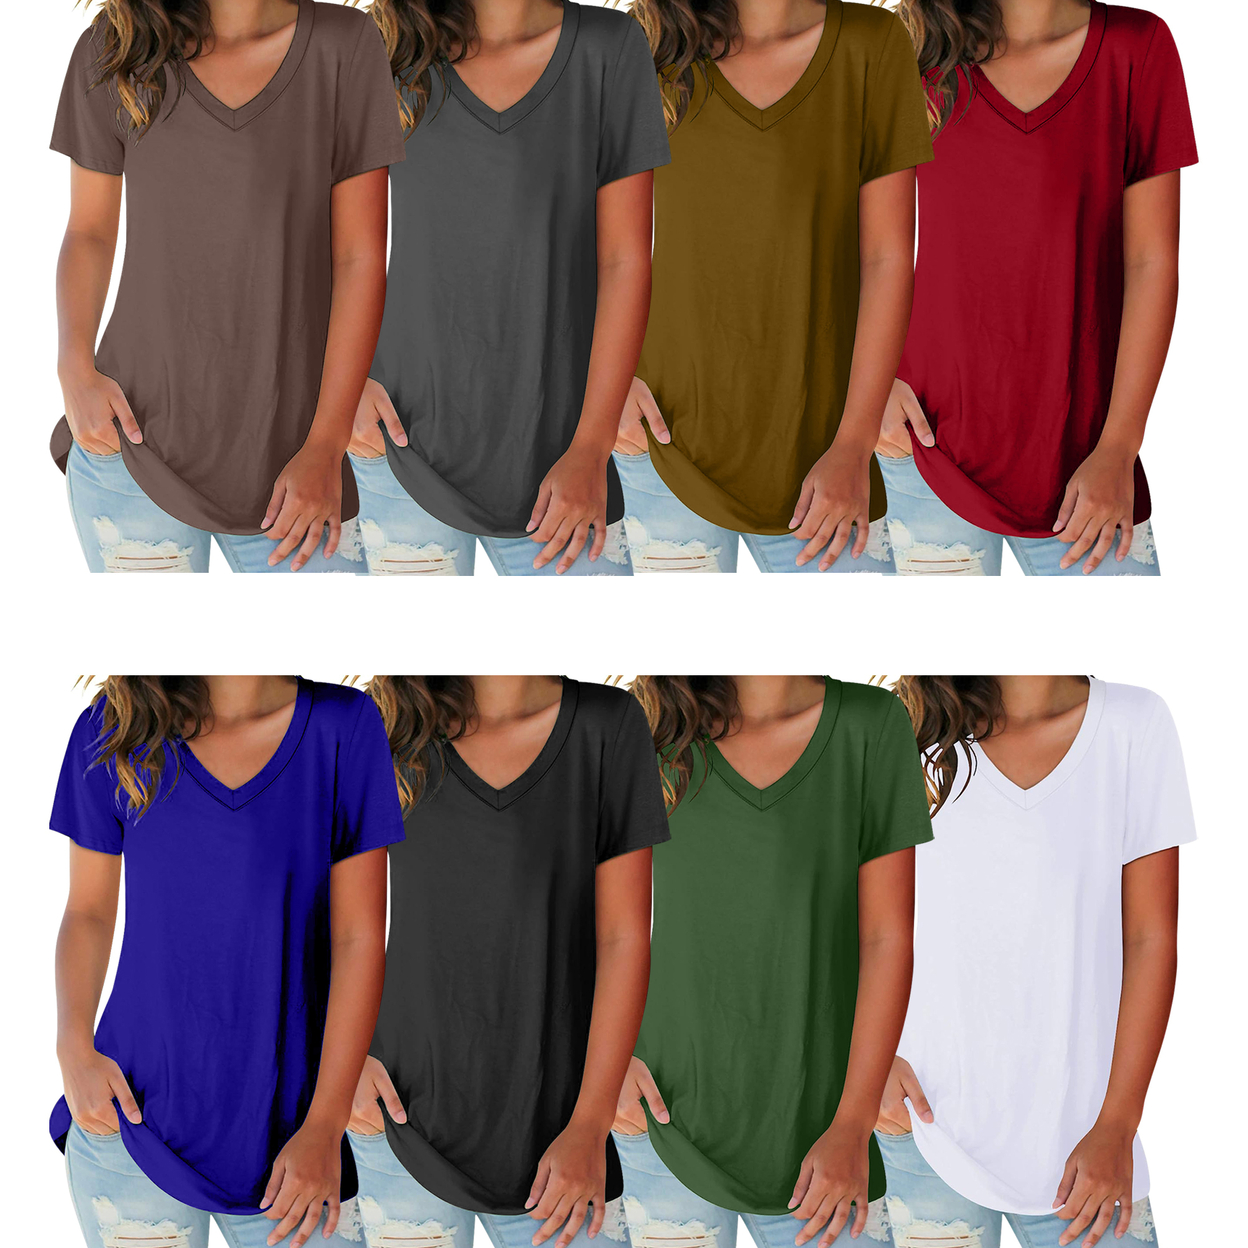 3-Pack: Women's Ultra Soft Smooth Cotton Blend Basic V-Neck Short Sleeve Shirts - Black, Navy, Grey, Xx-large